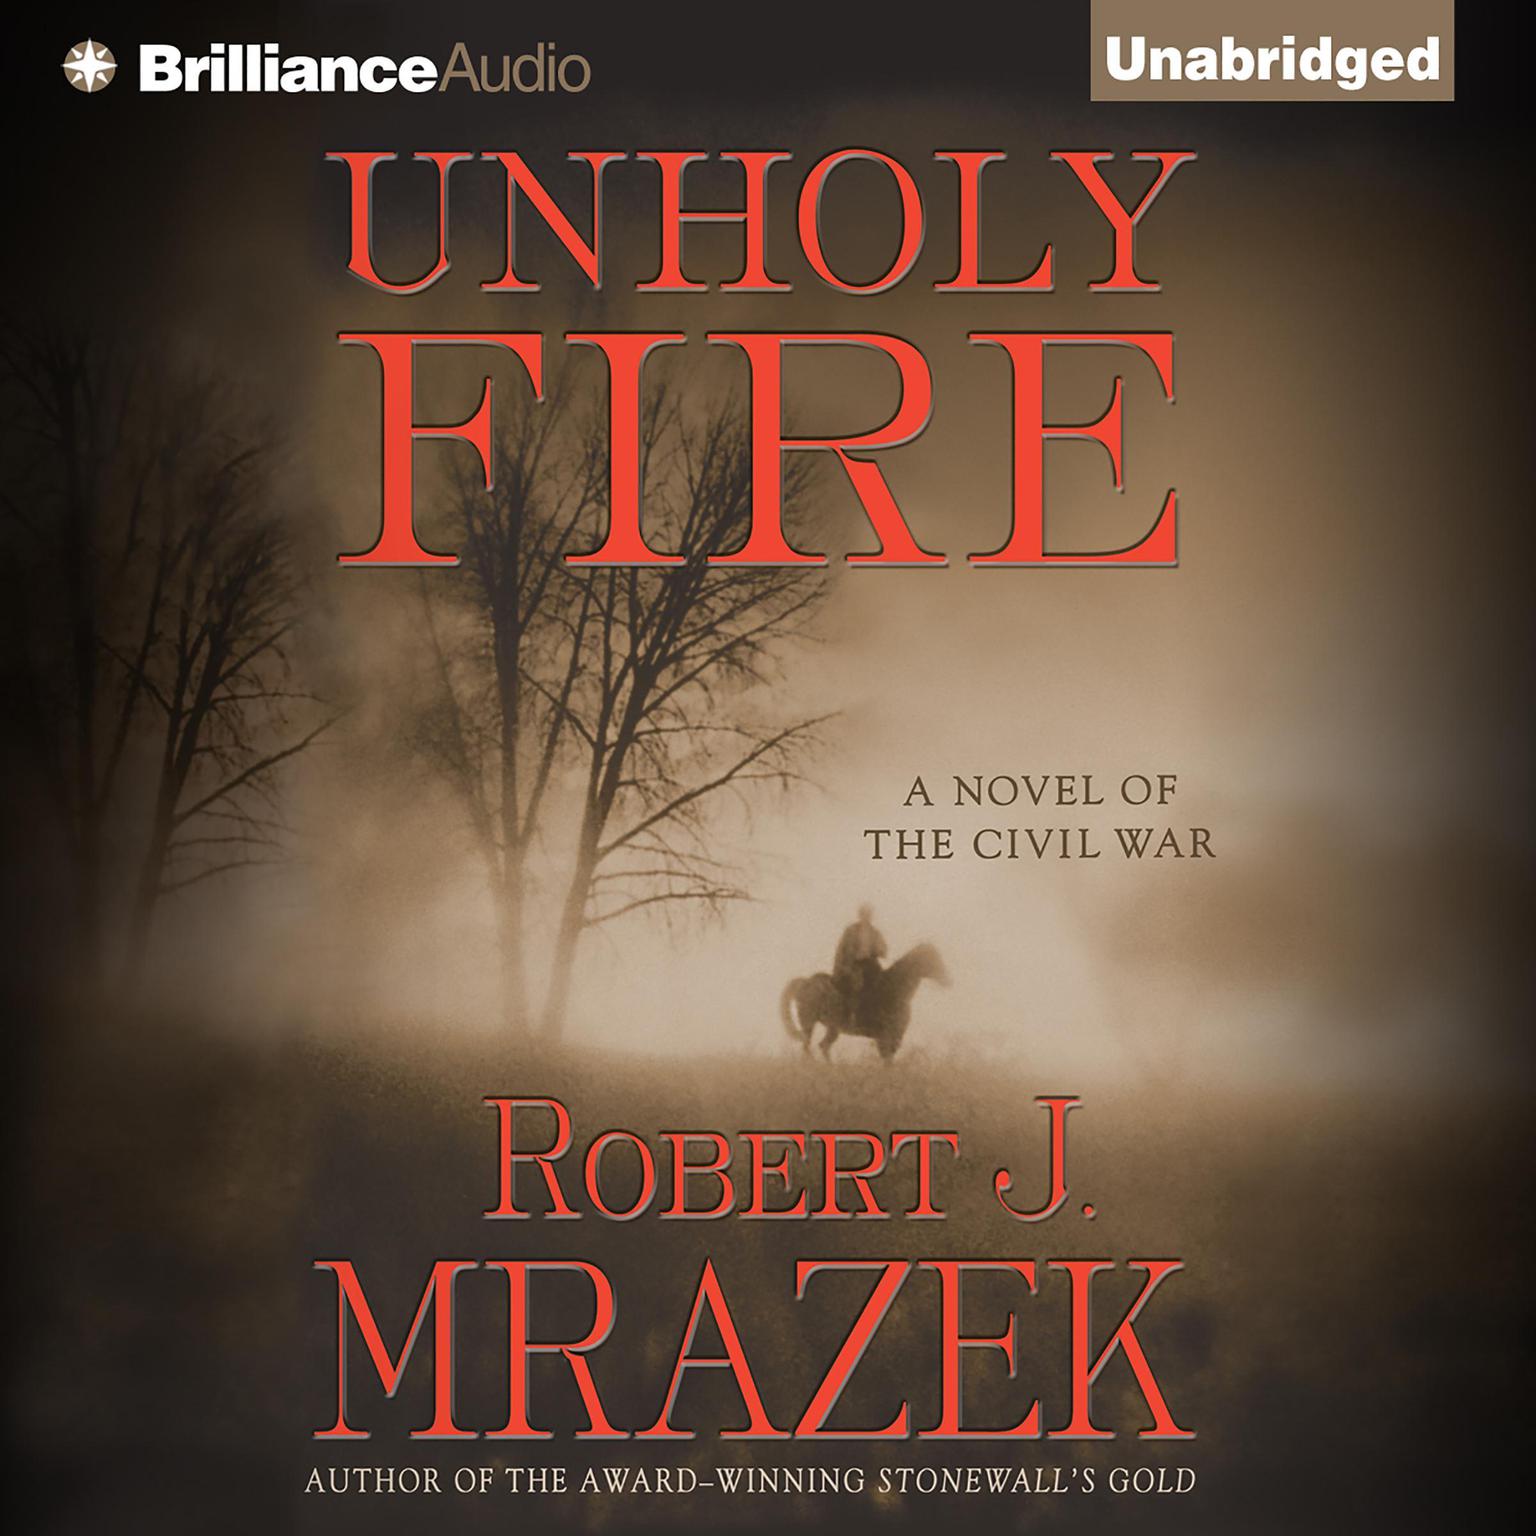 Unholy Fire Audiobook, by Robert J. Mrazek